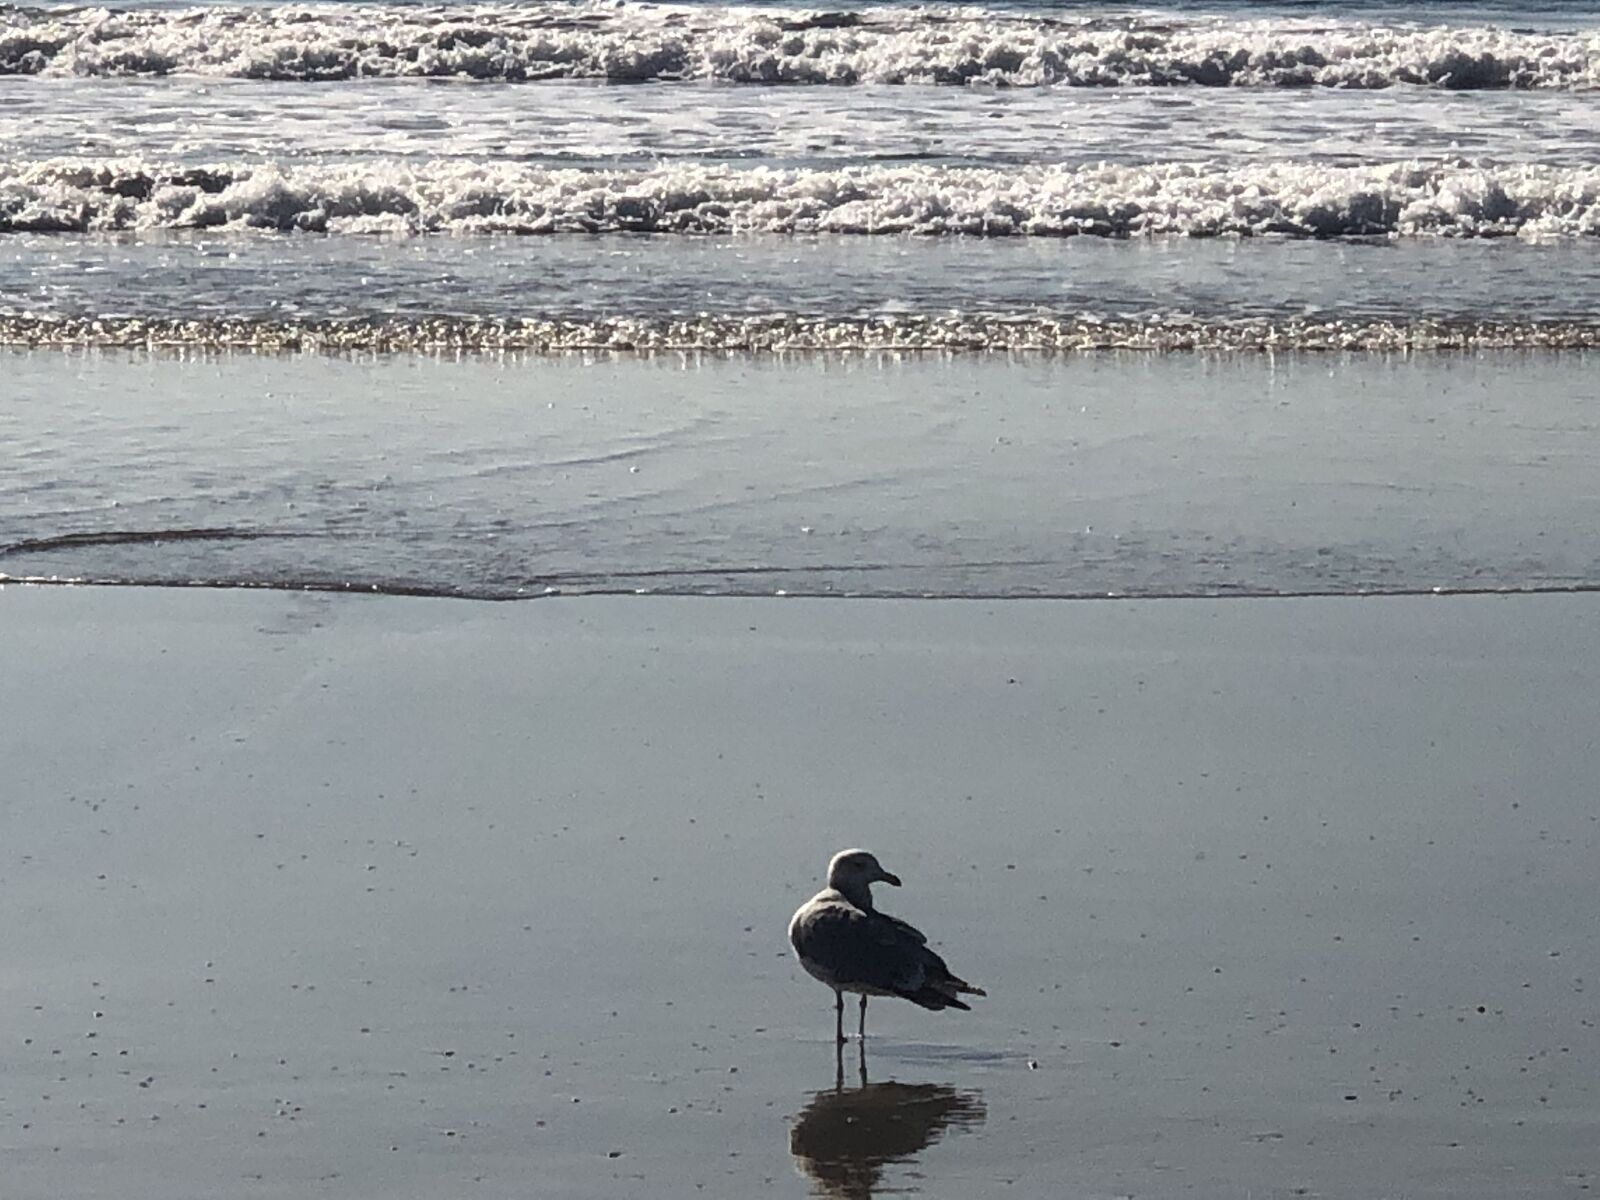 iPhone X back dual camera 6mm f/2.4 sample photo. Seagull, beach, ocean photography